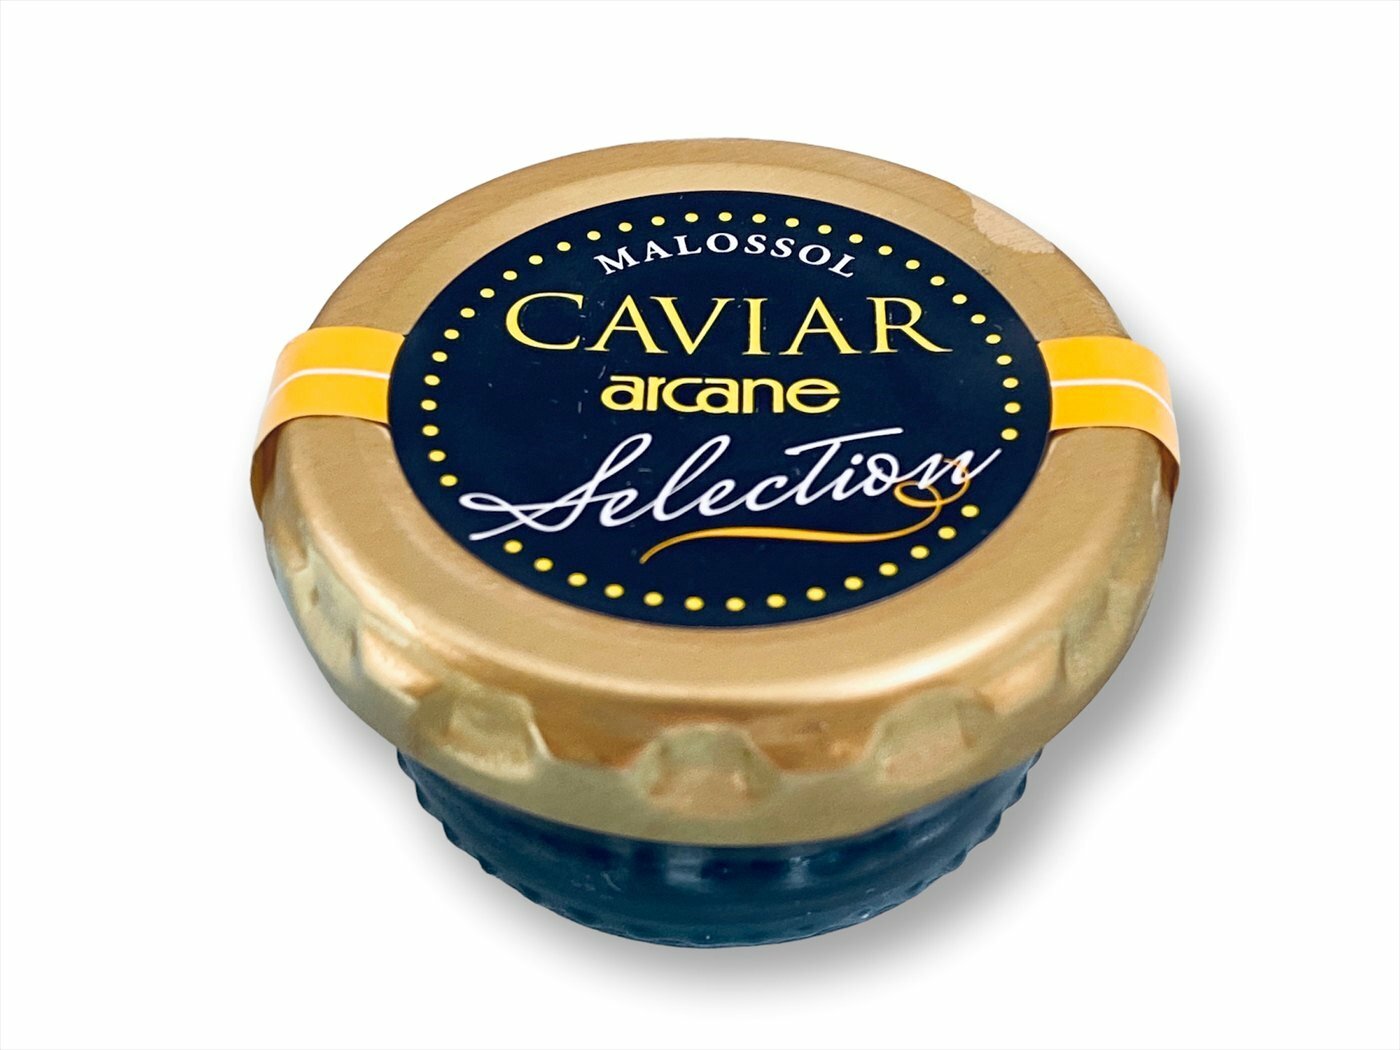 Malossol Caviar arcan Selection